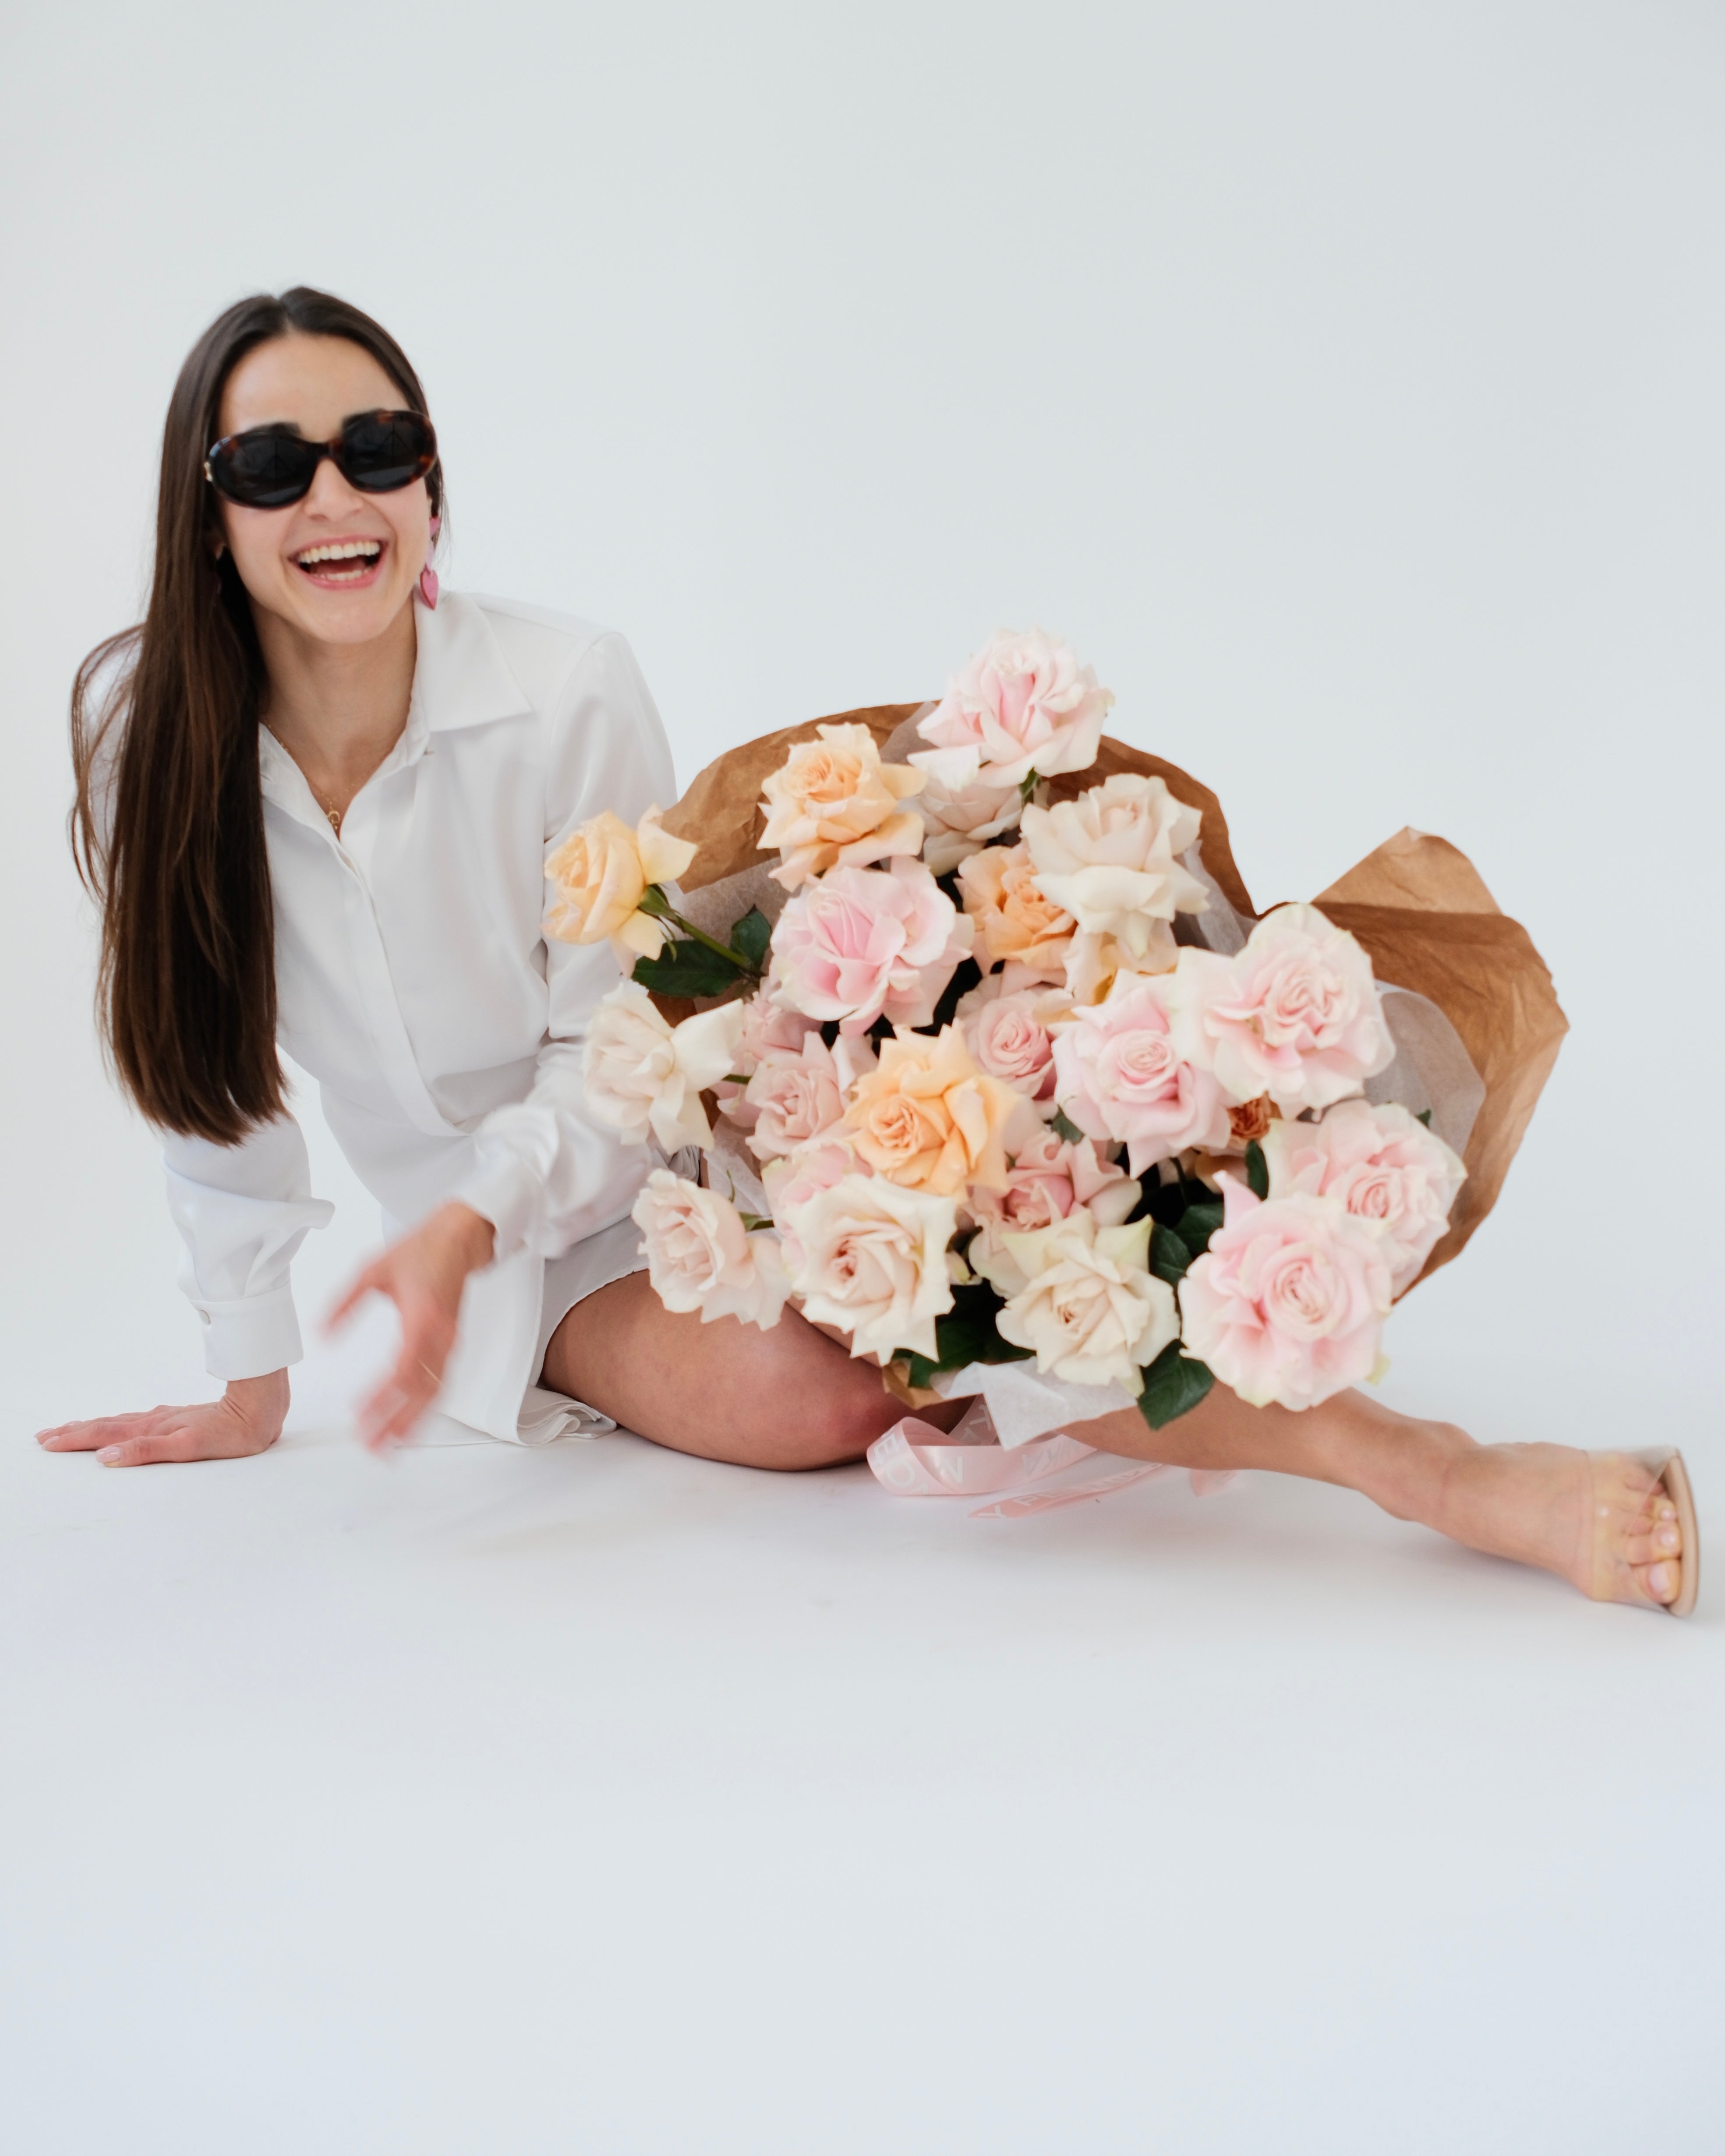 Bouquet “Lovin on me” - 2 dozen roses